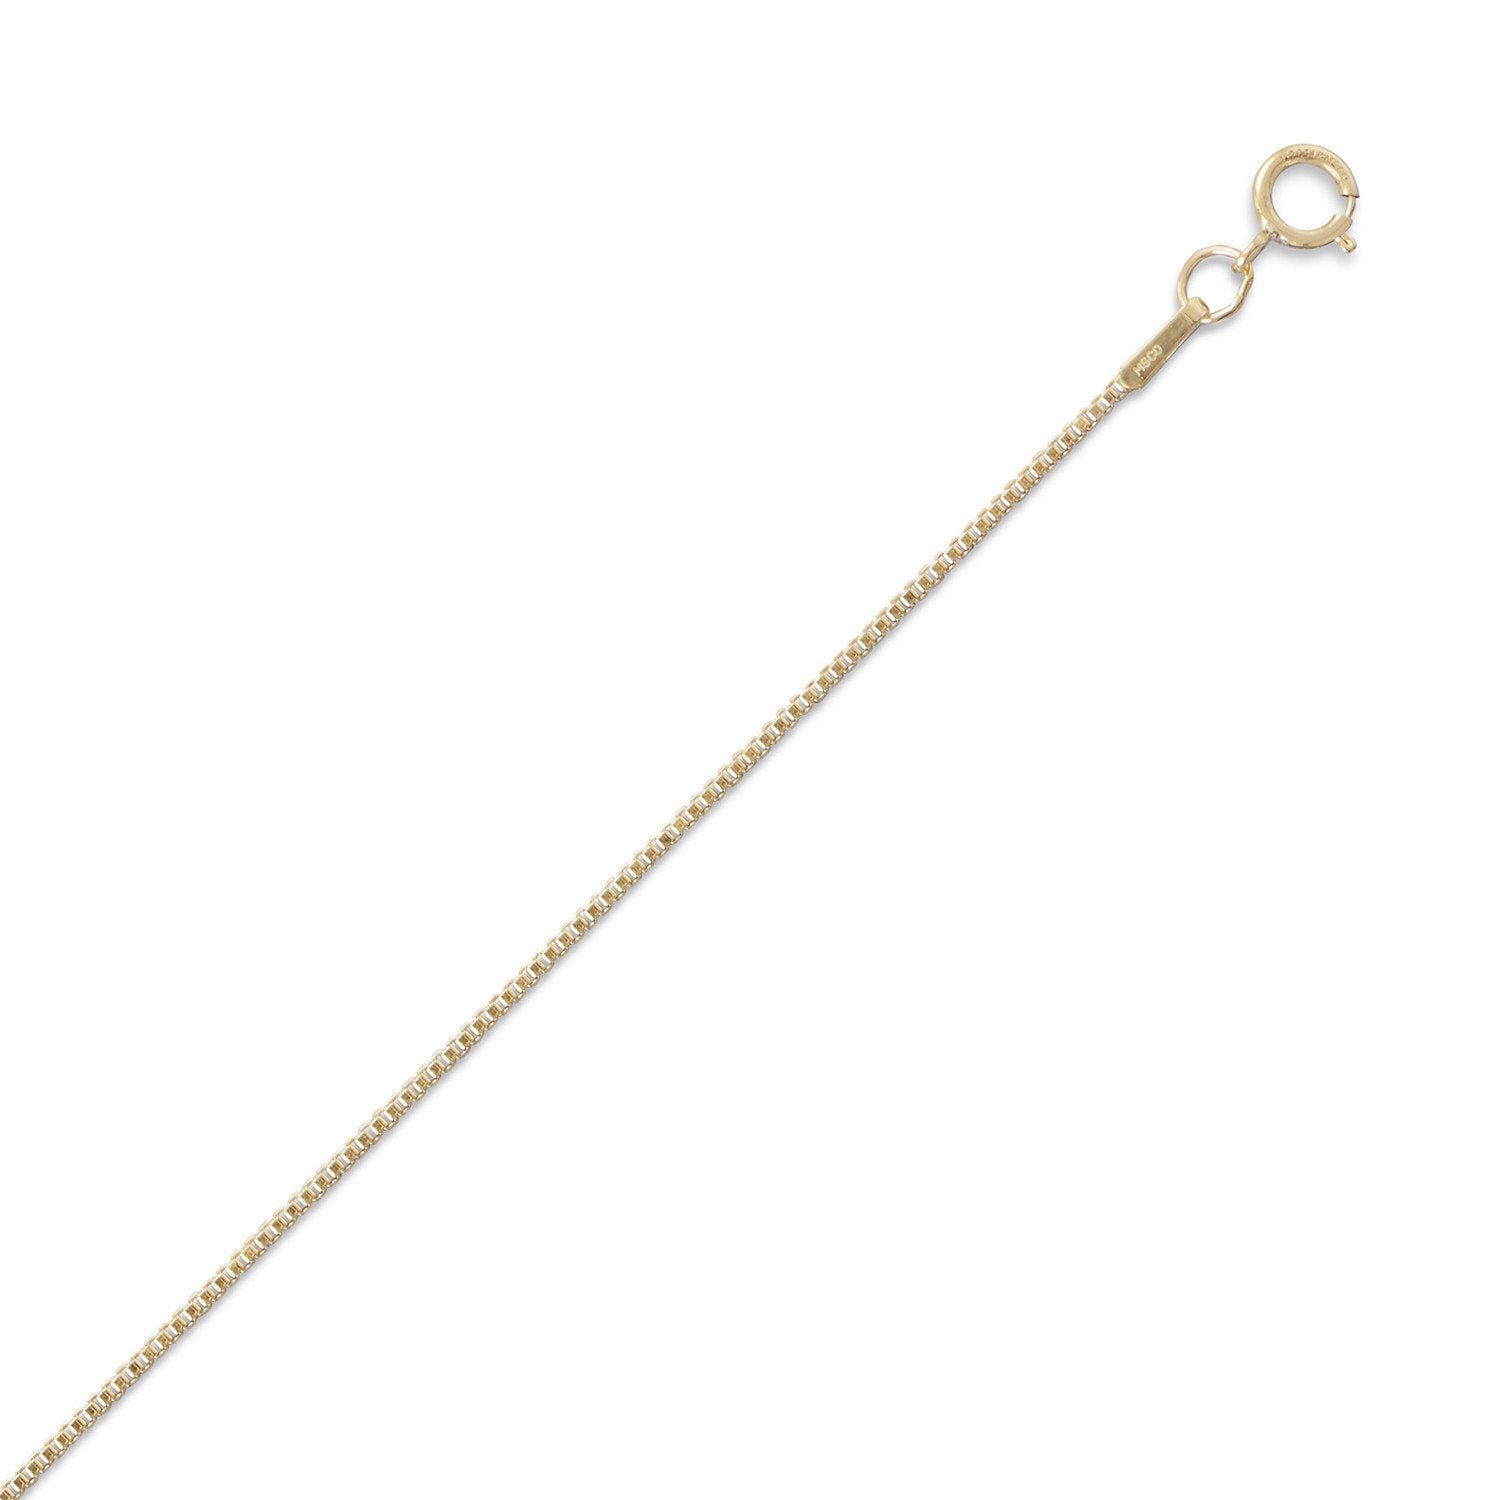 14/20 Gold Filled Box Chain (1mm) - Joyeria Lady